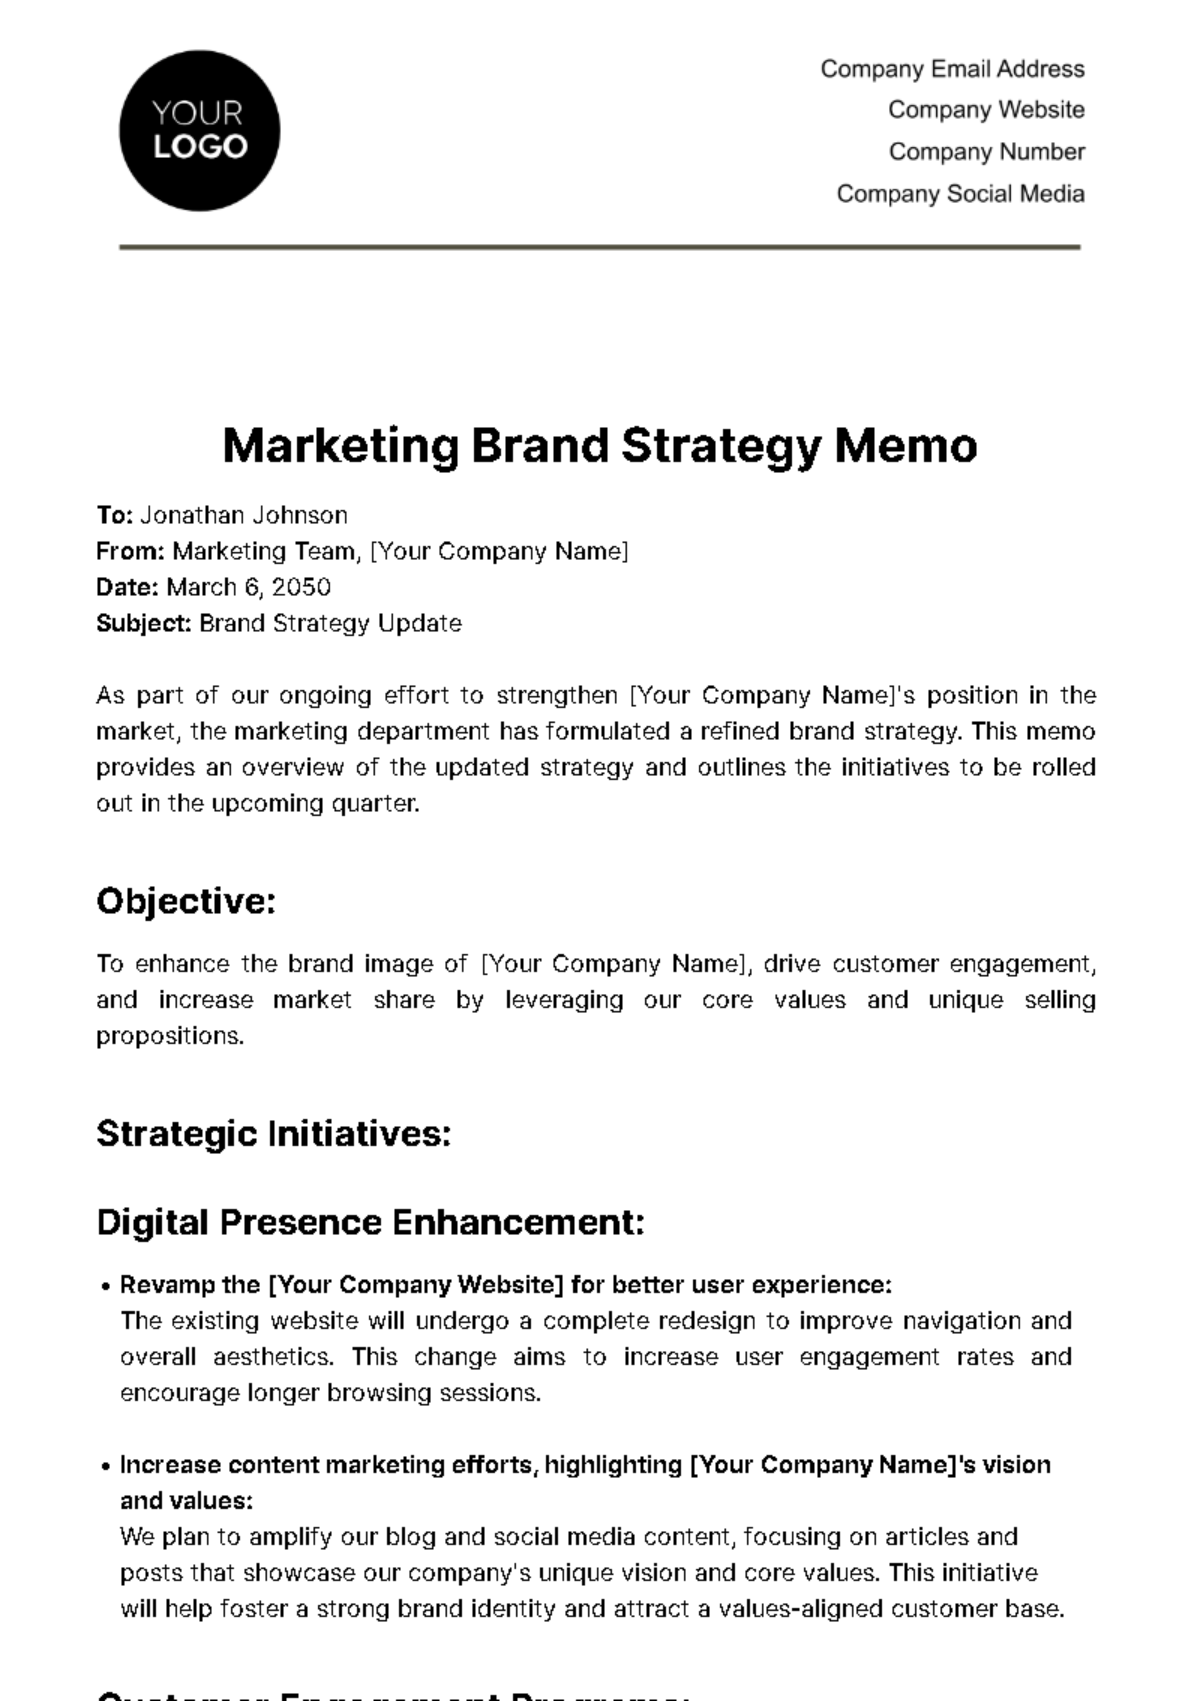 Free Marketing Brand Strategy Memo Template